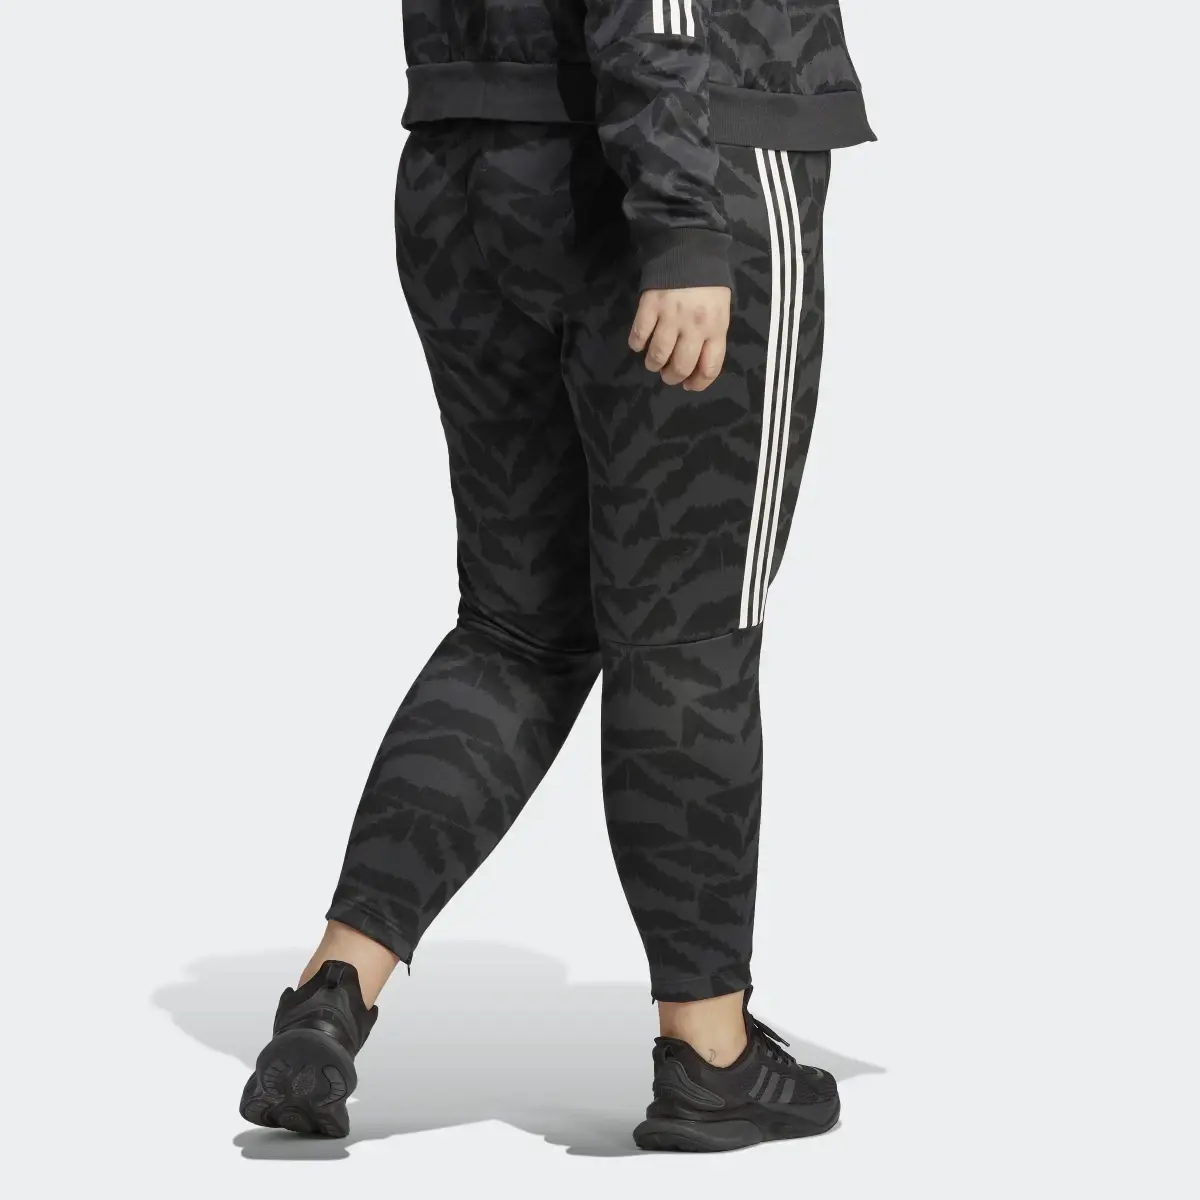 Adidas Tiro Suit Up Lifestyle Trainingshose – Große Größen. 2